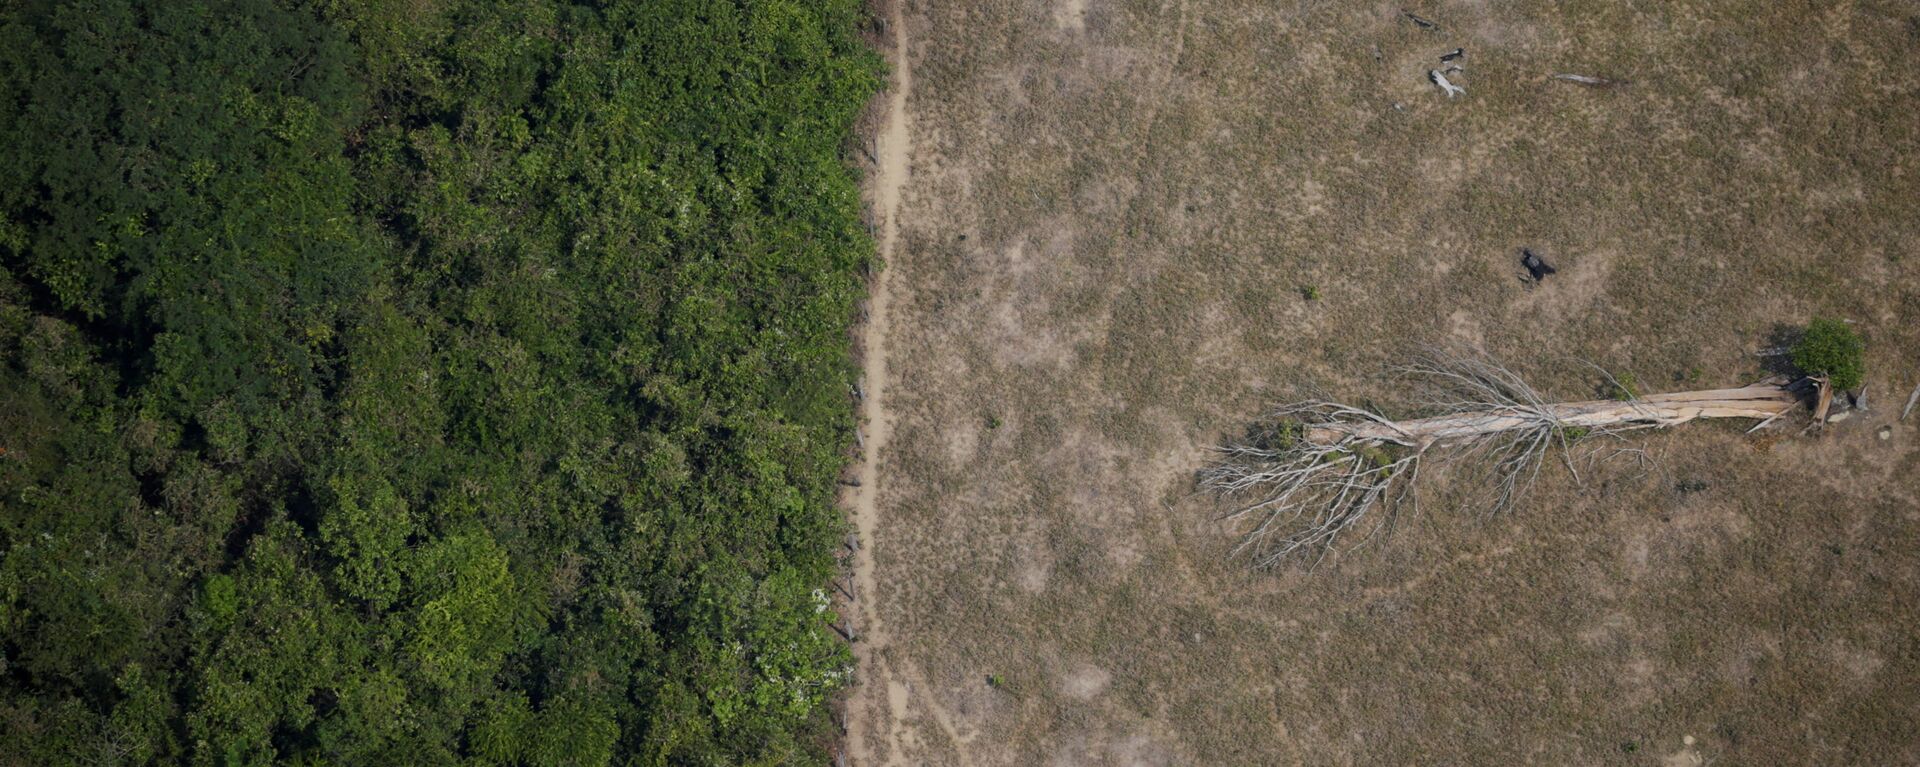 Área desmatada na Amazônia. - Sputnik Brasil, 1920, 06.05.2021